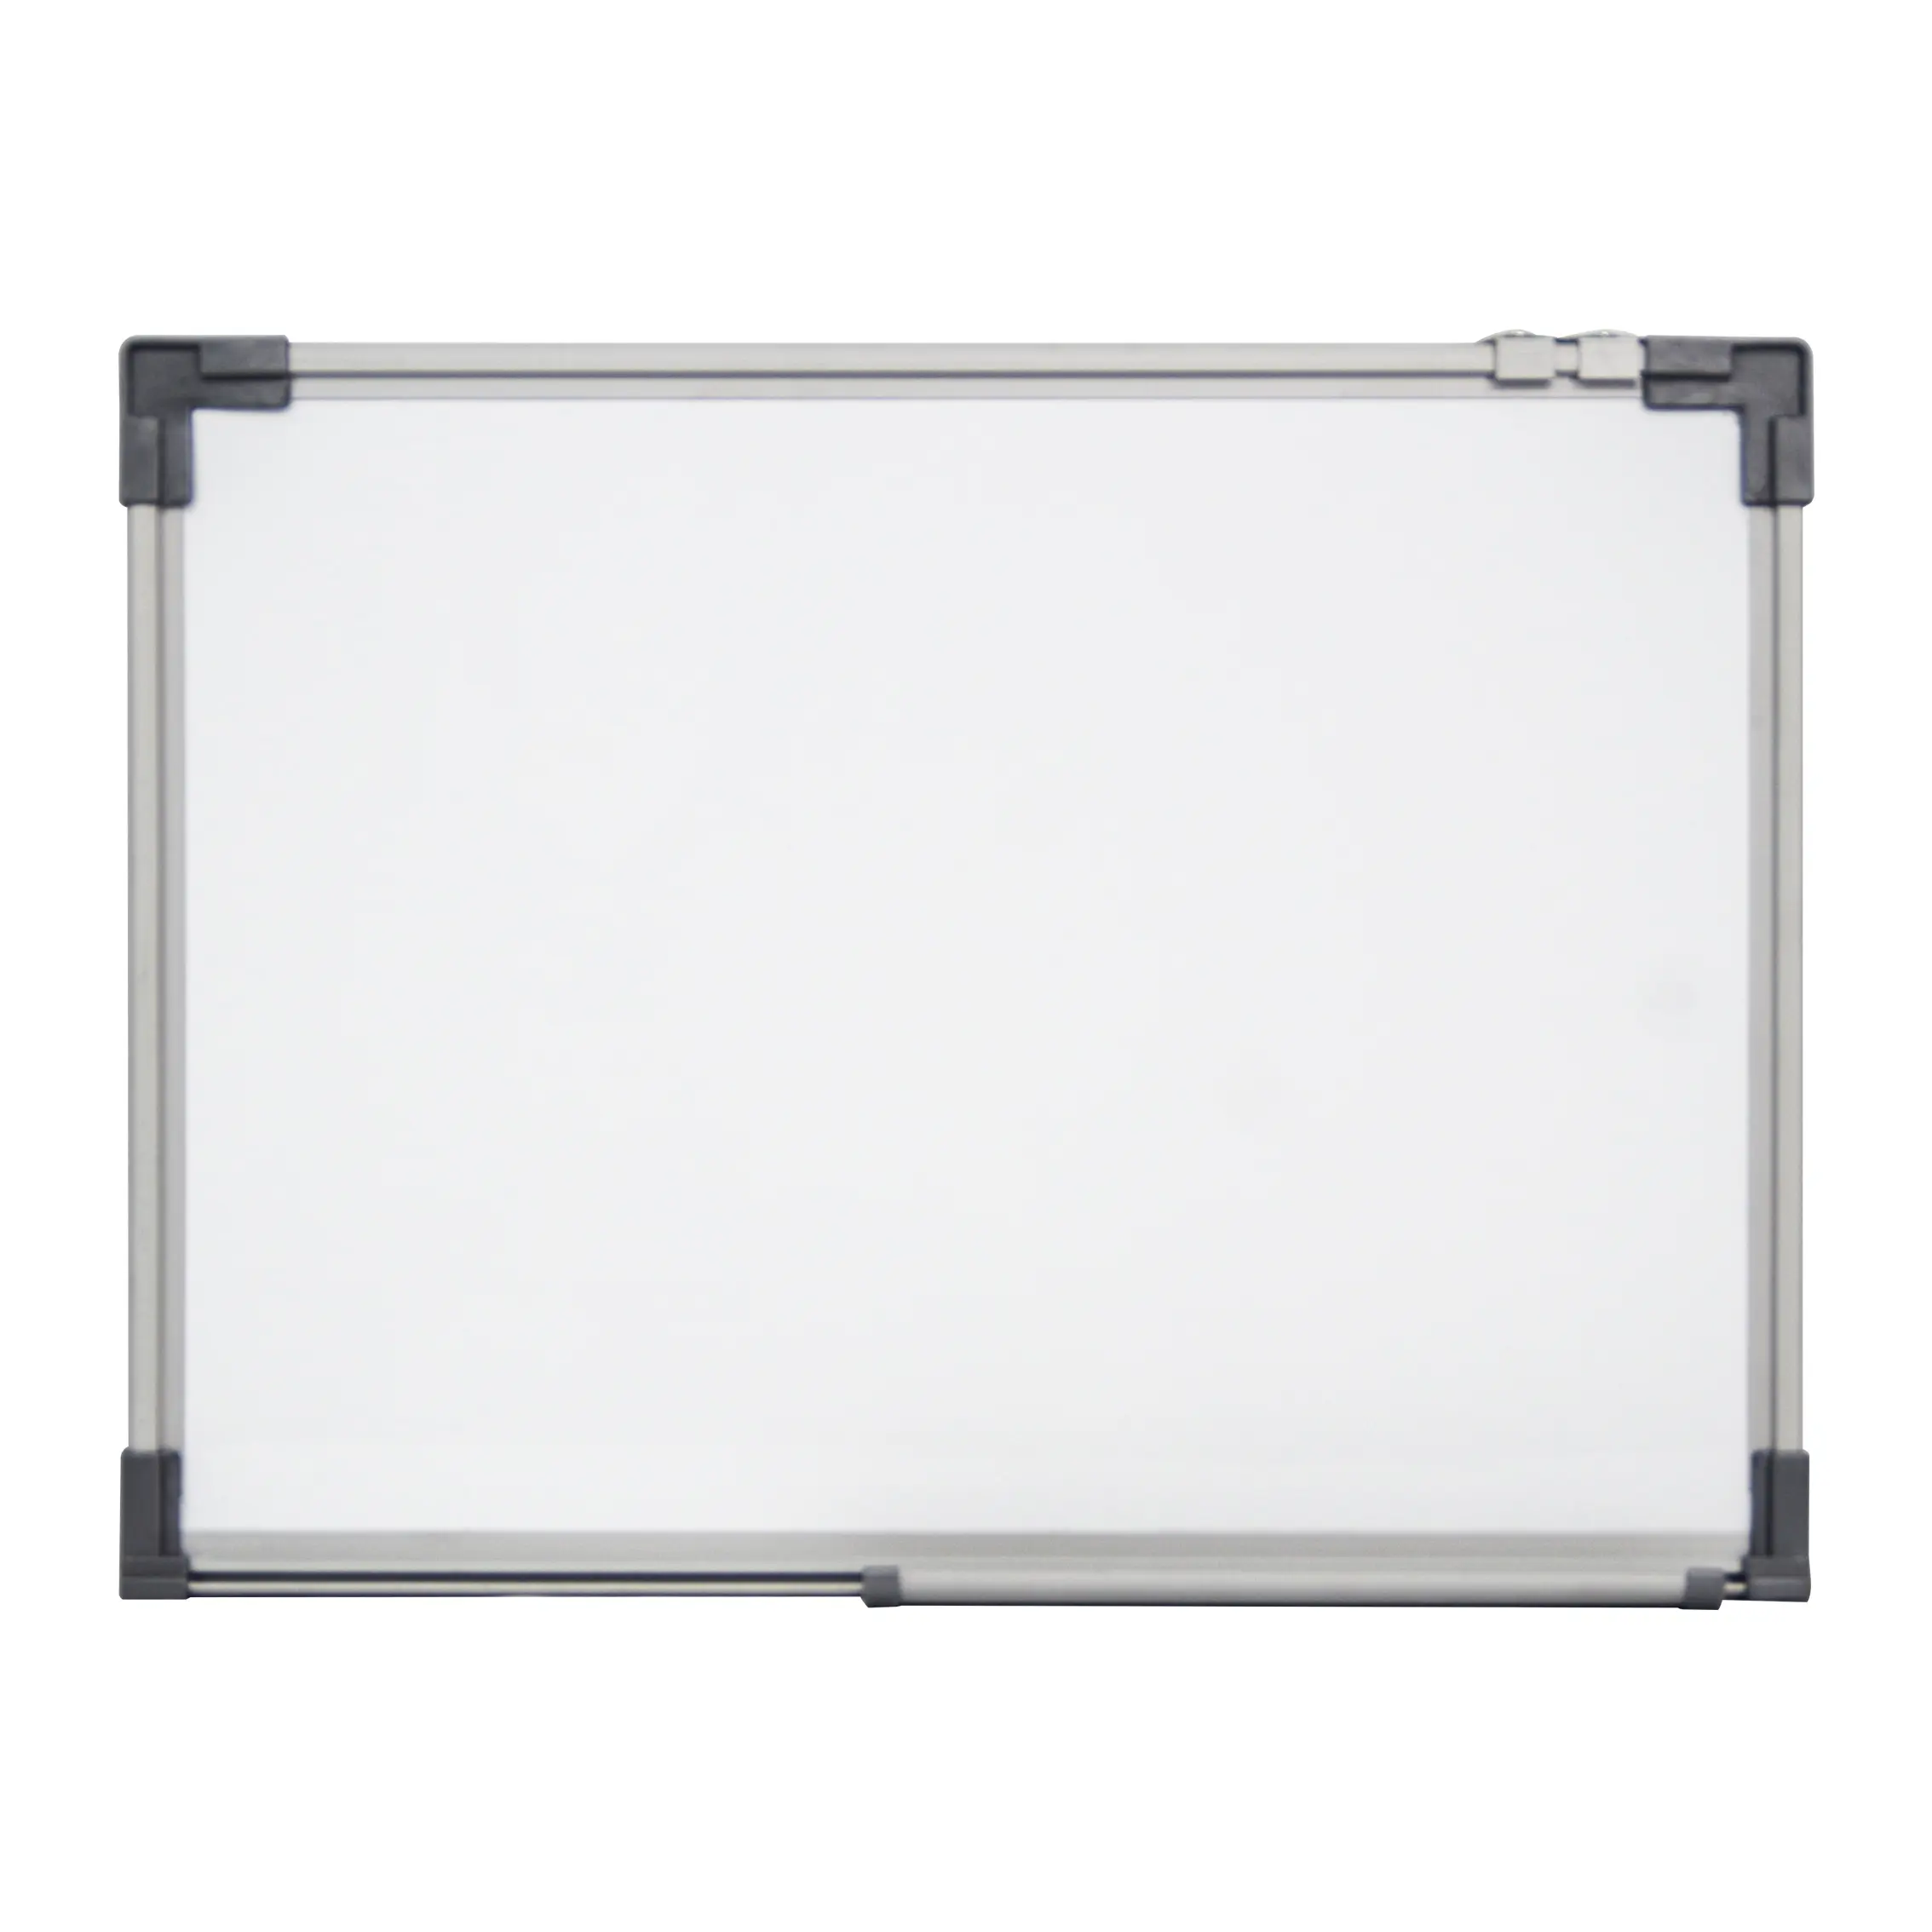 सूखा मिटा मानक आकार साफ कमरे कक्षा छोटे एकल पक्ष चुंबकीय सफेद बोर्ड फ्रिज स्टिकर